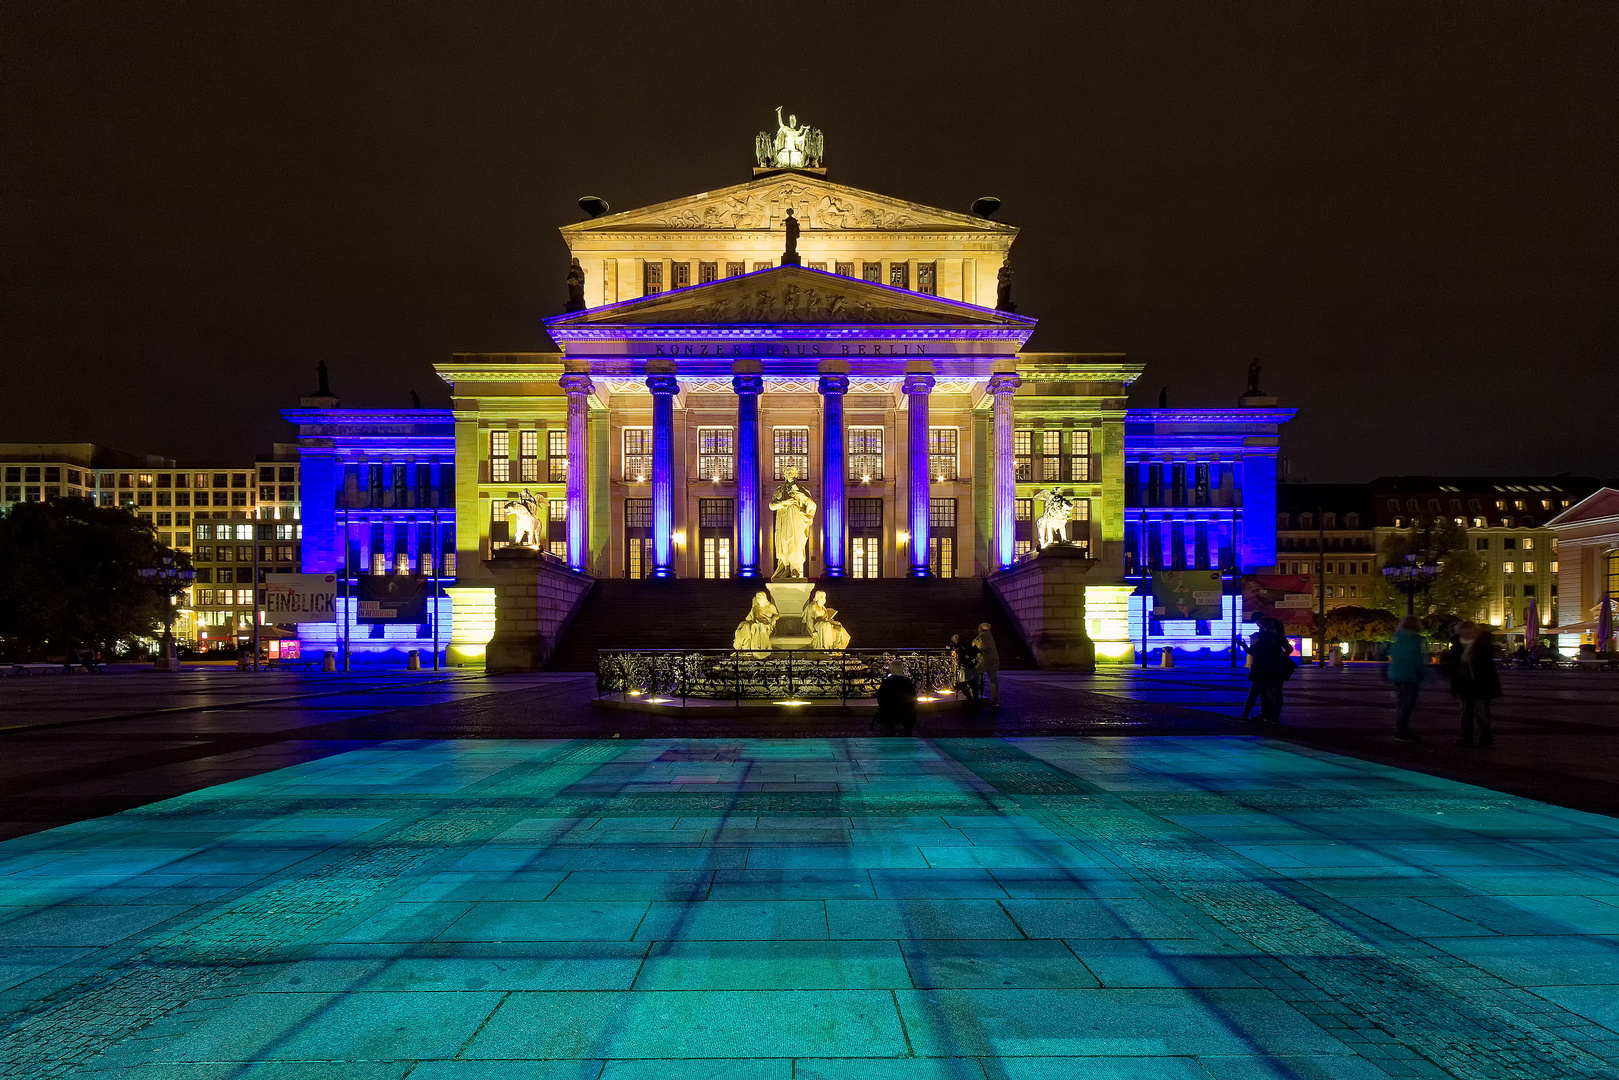 Berlin leuchtet - Gendarmenmarkt - Konzerthaus Berlin